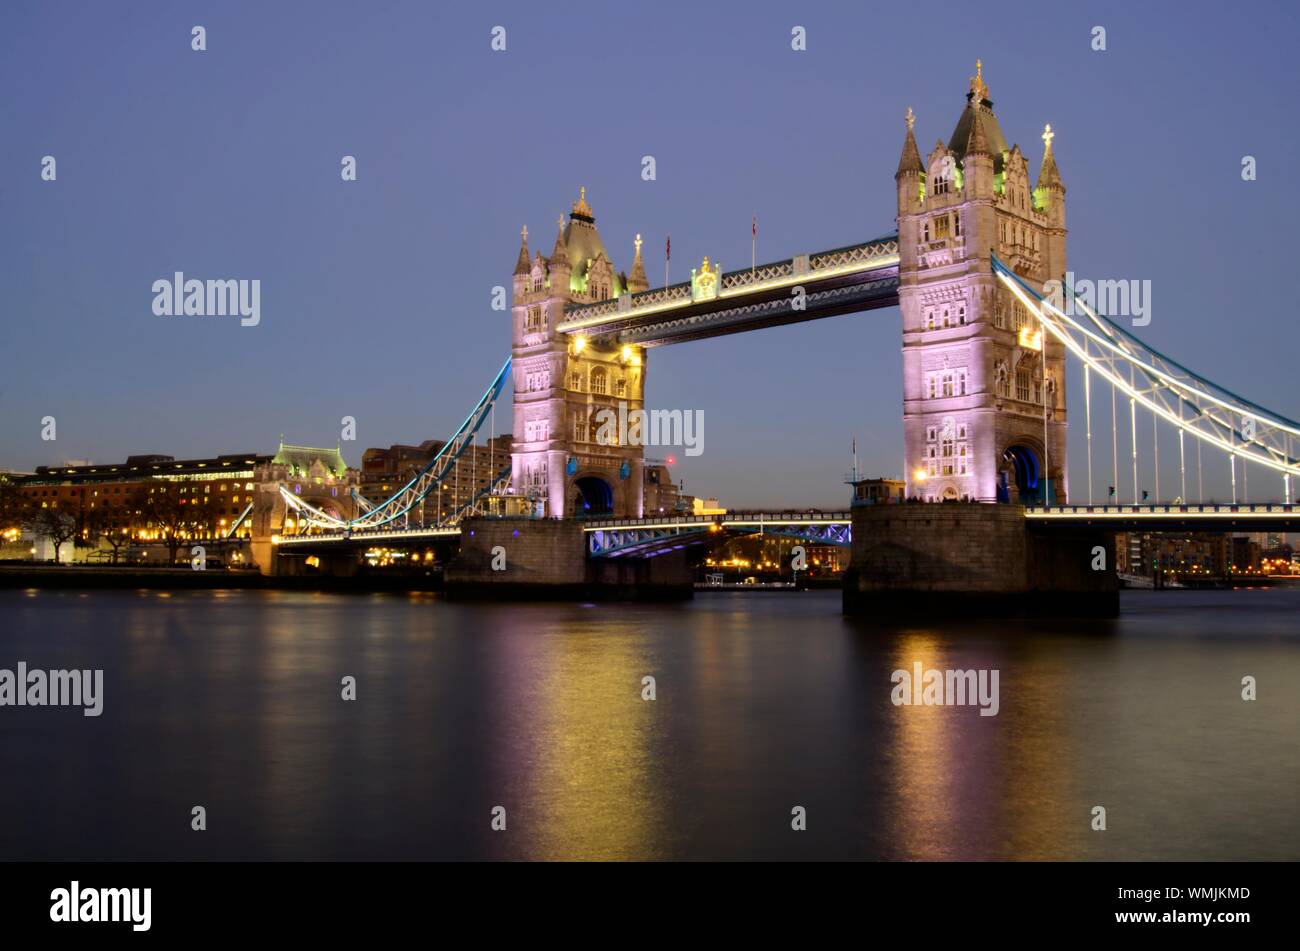 Tower Bridge in London illuminated at night Stock Photo